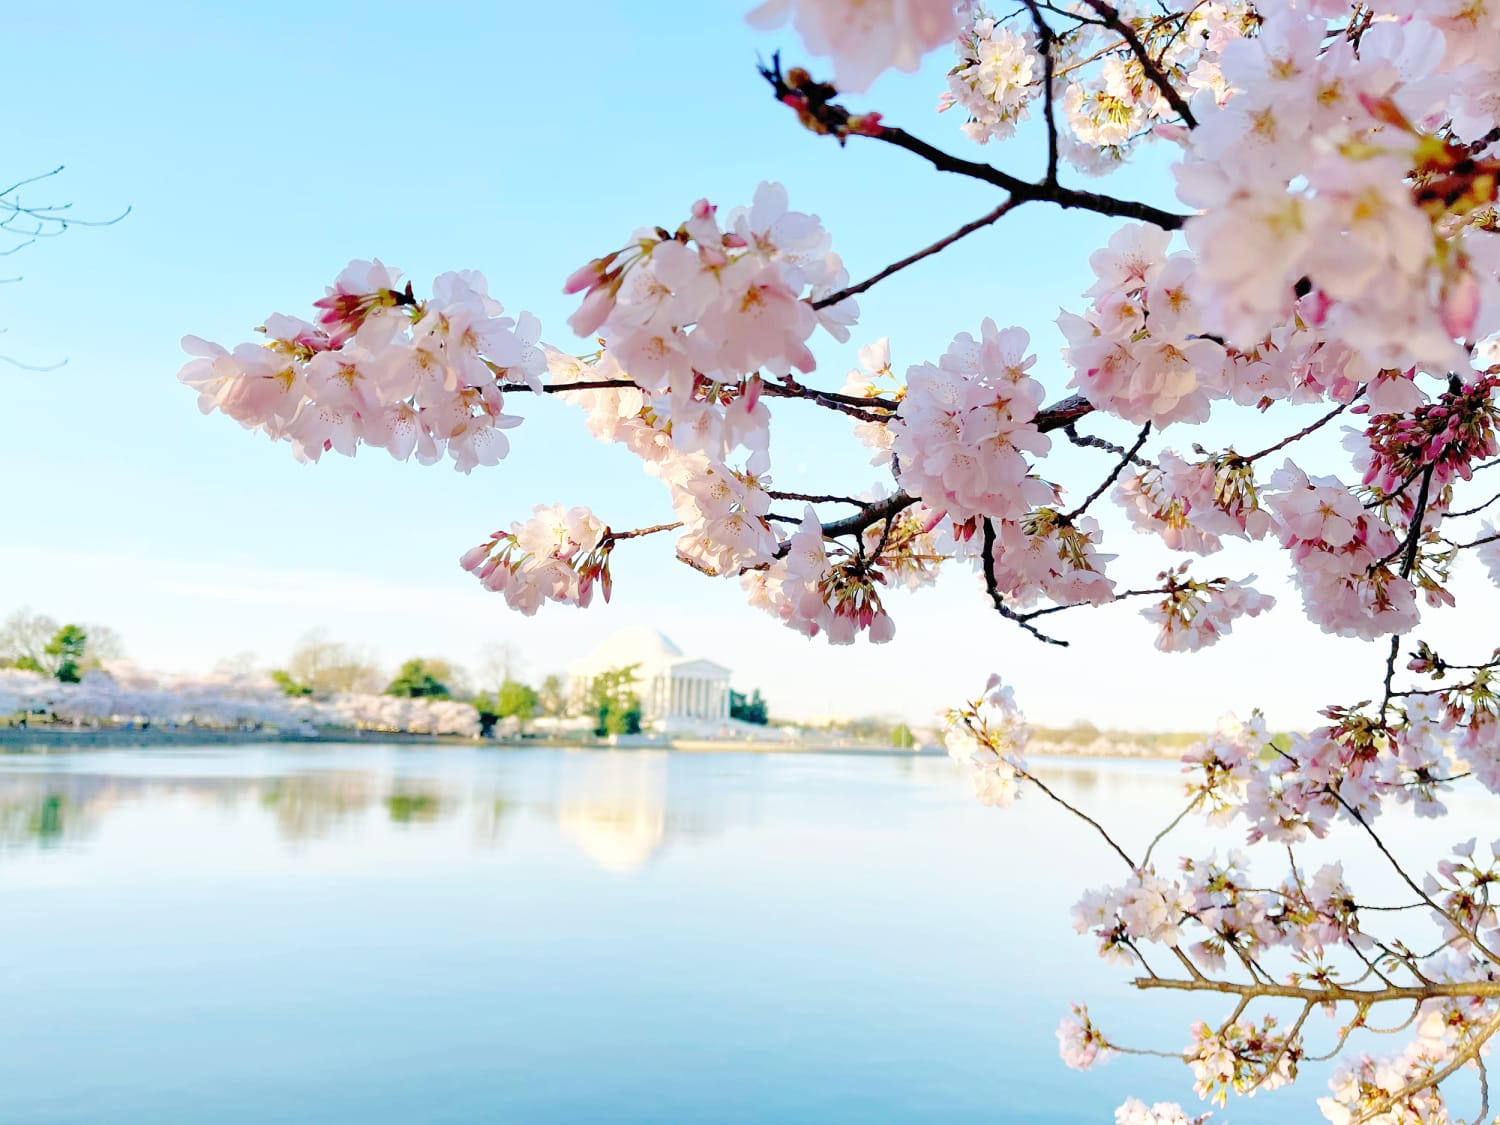 What Happens at the Washington DC Cherry Blossom Festival?